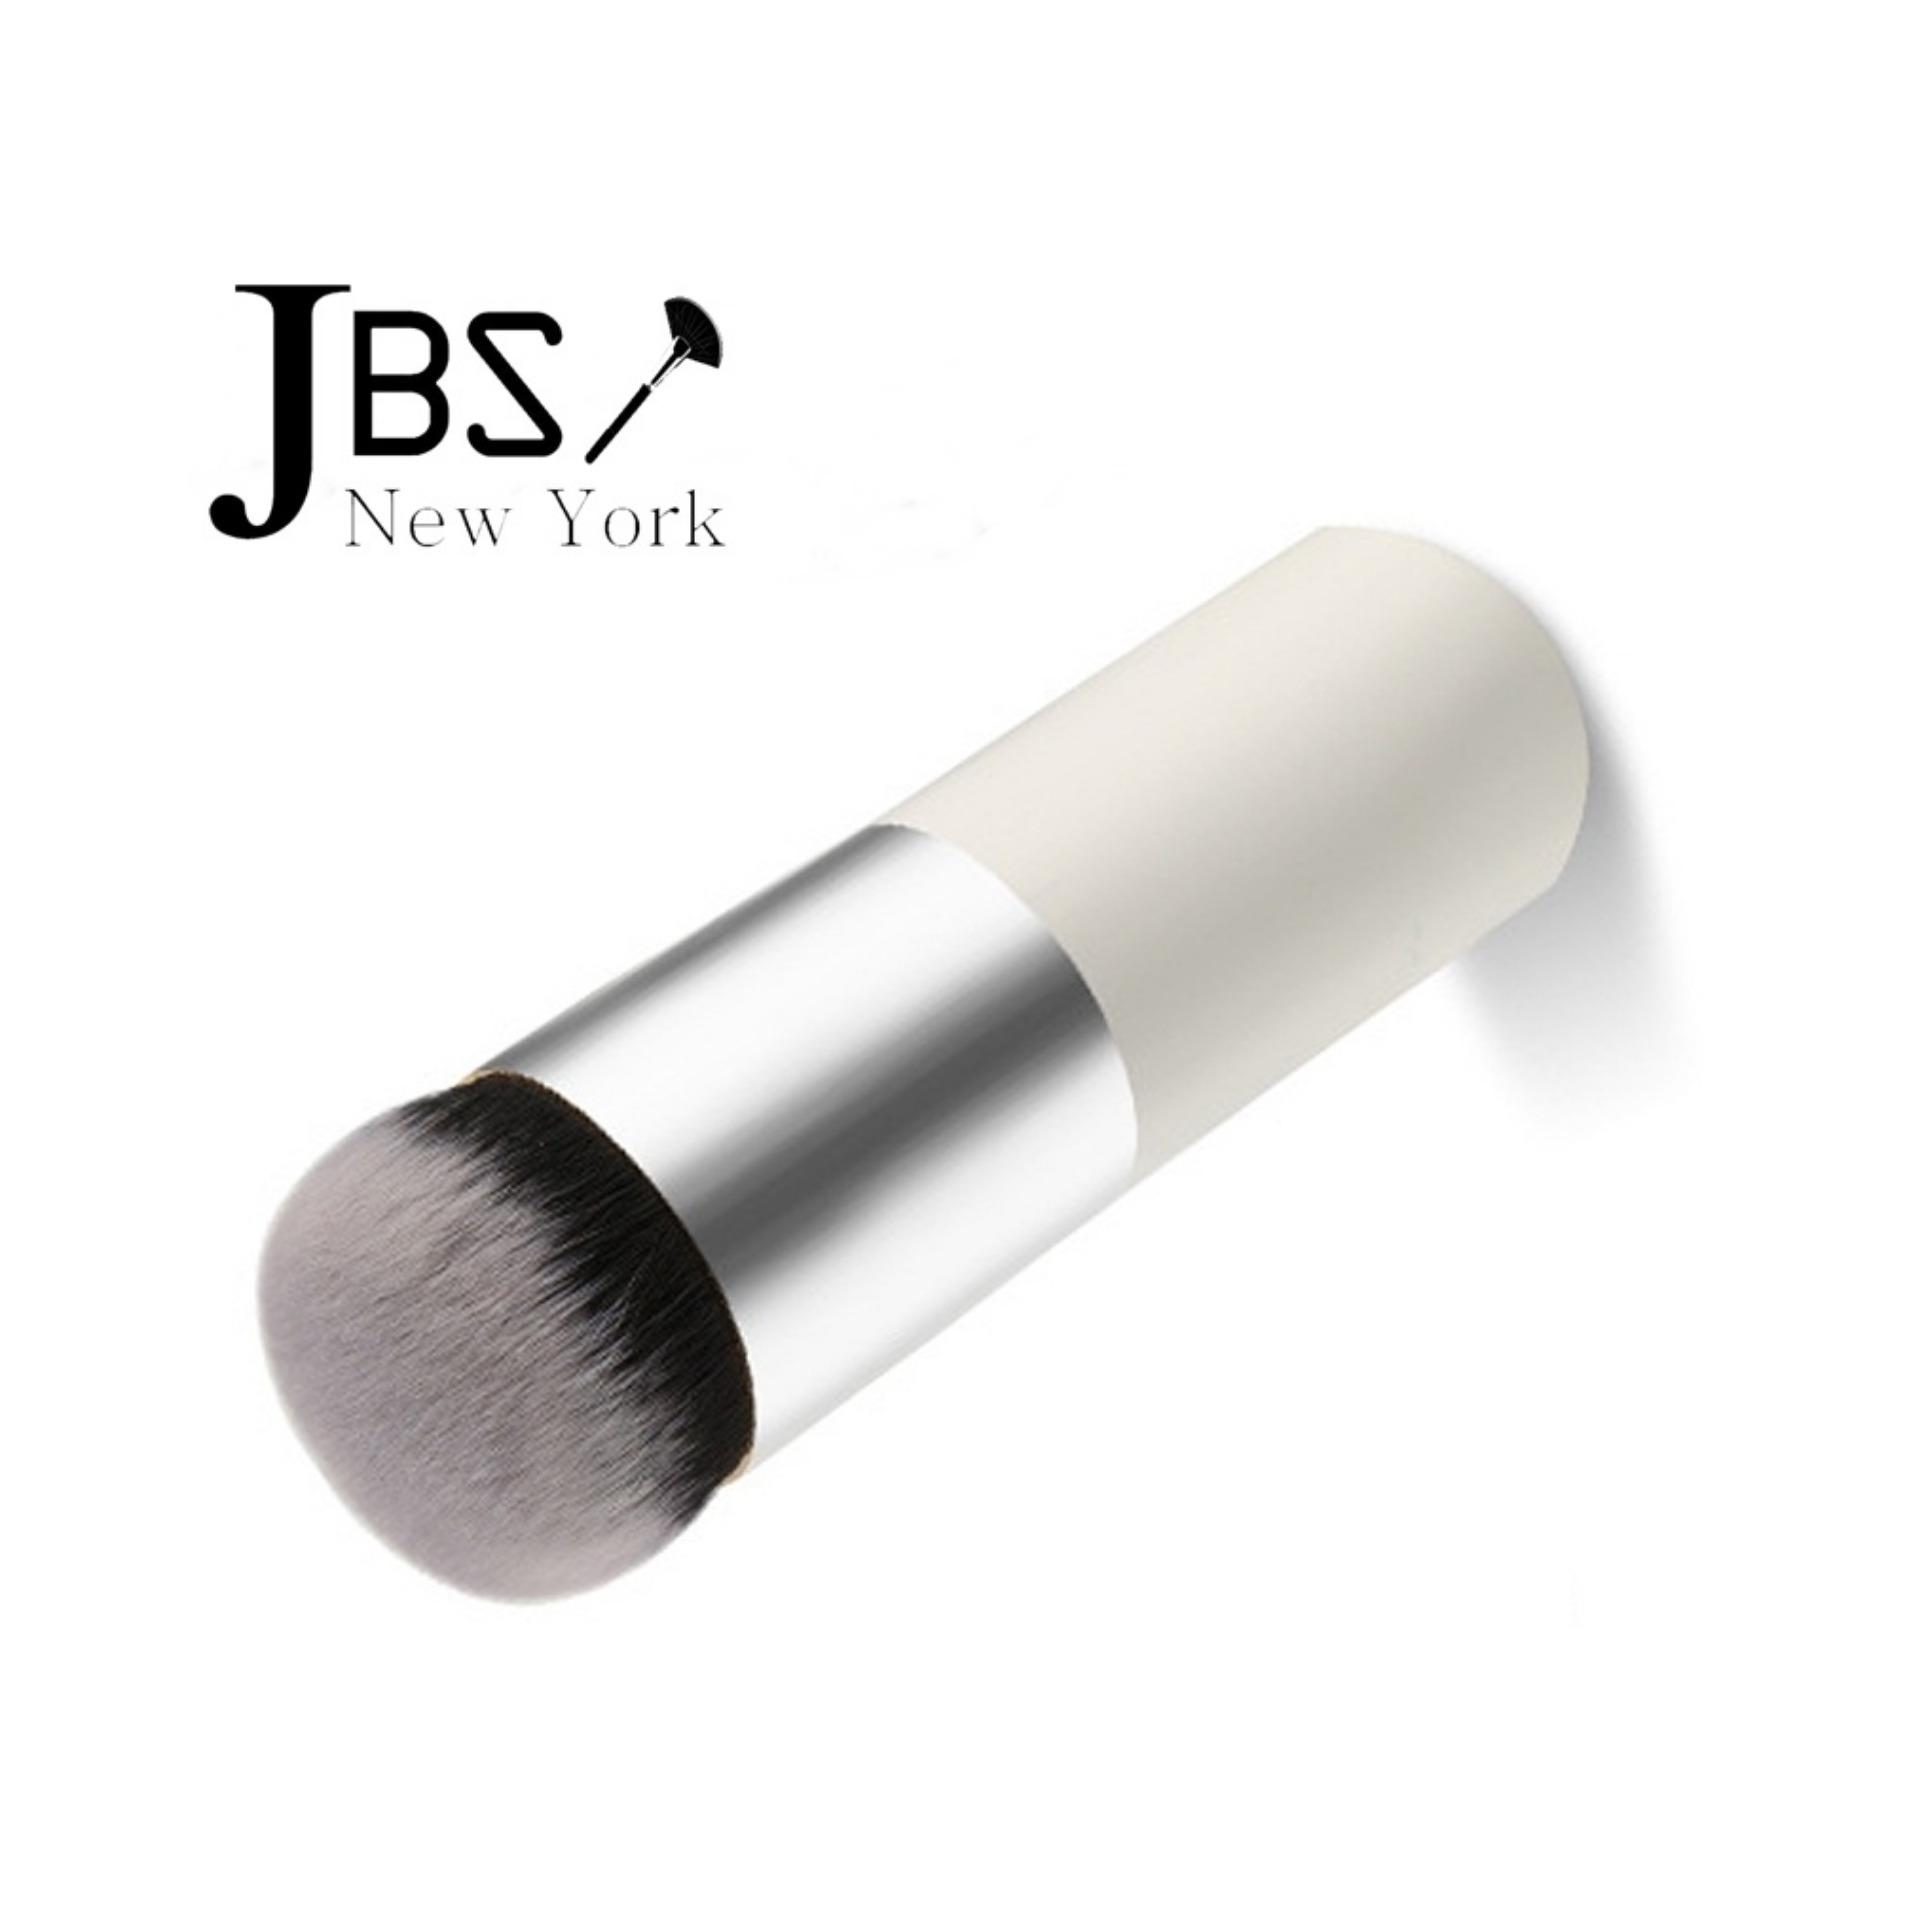 JBS New York makeup brush  / Kuas Make Up chuby pier silver / Kuas Foundation bedak tabur bagian atas datar kosmetik Makeup Brush / K - 019